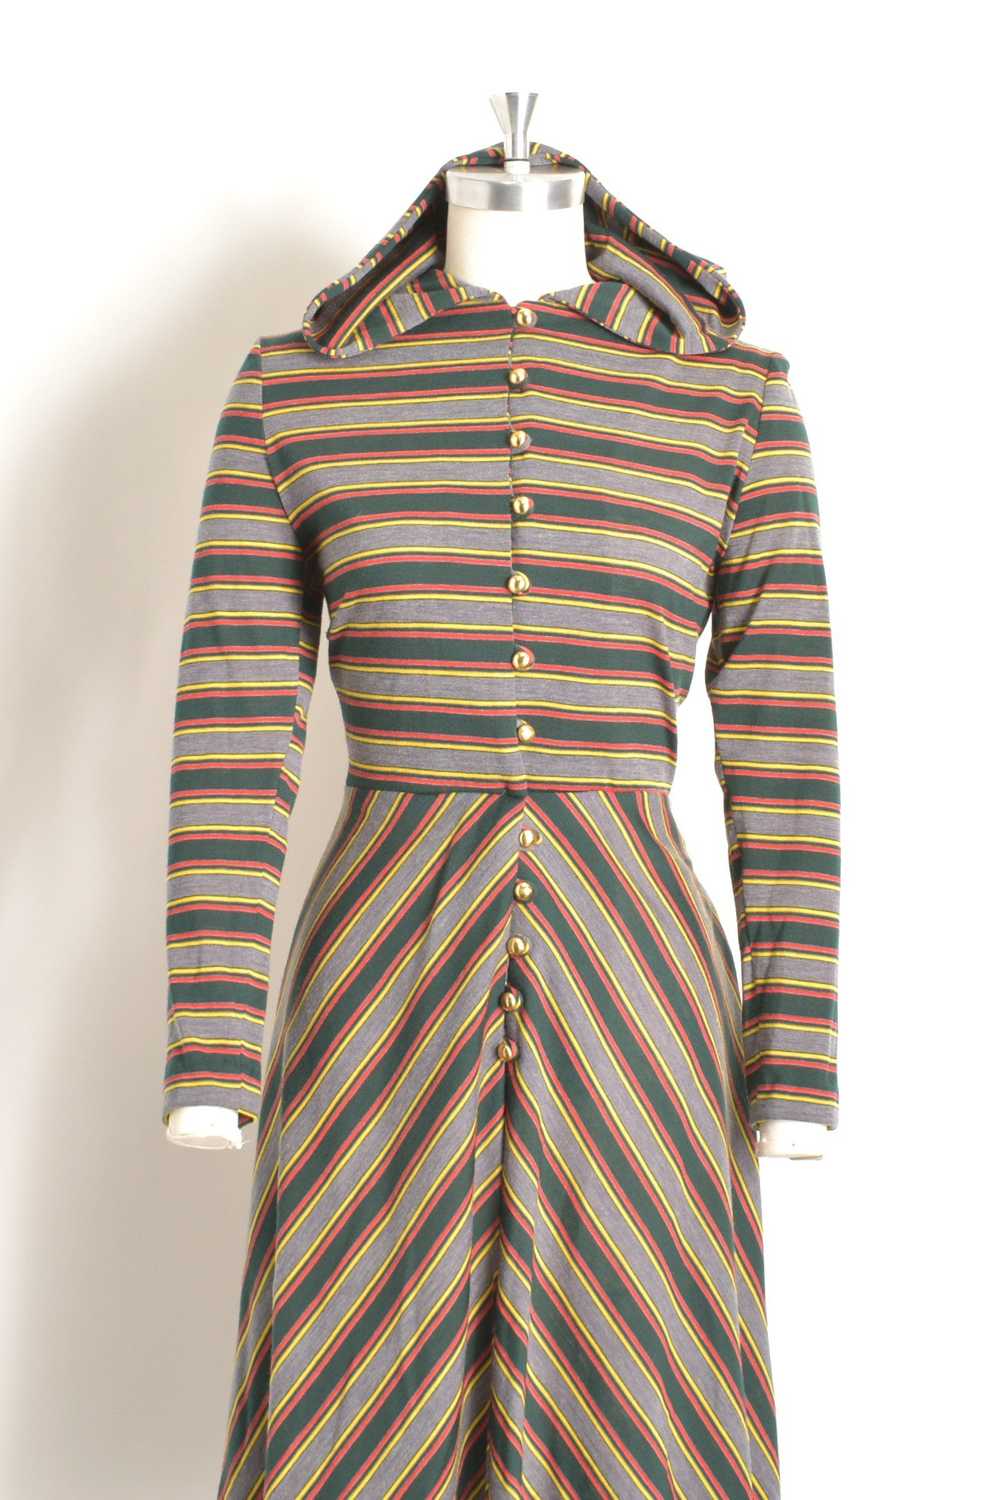 1970s Striped Hooded Dress-medium - image 2